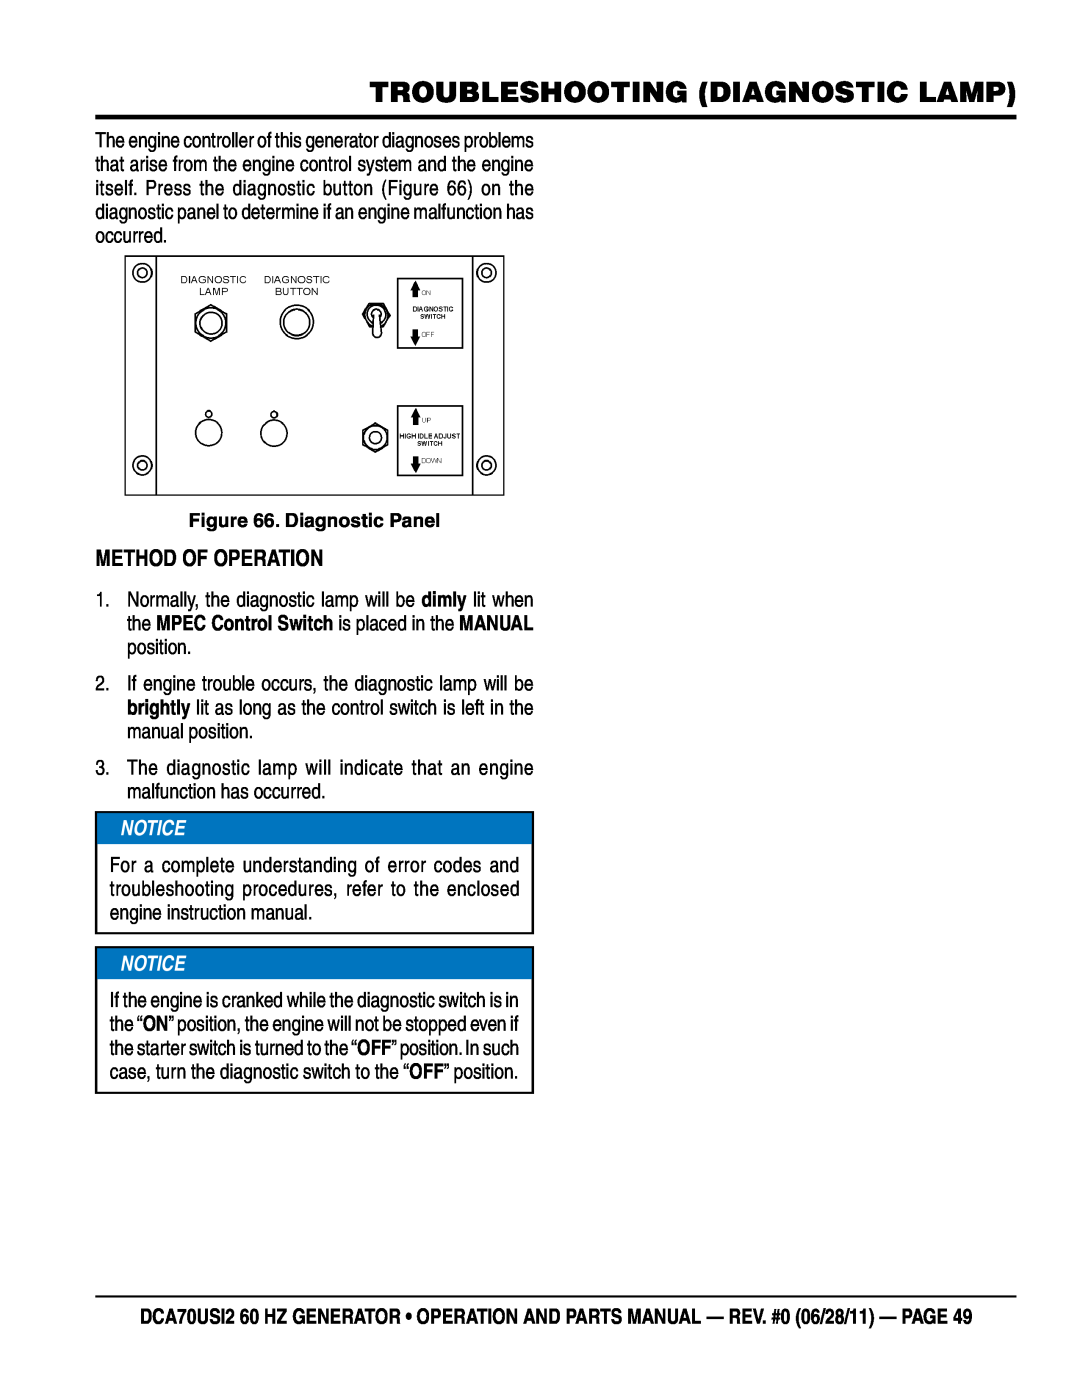 Multiquip DCA70USI2 manual Troubleshooting Diagnostic lamp, Method of Operation 